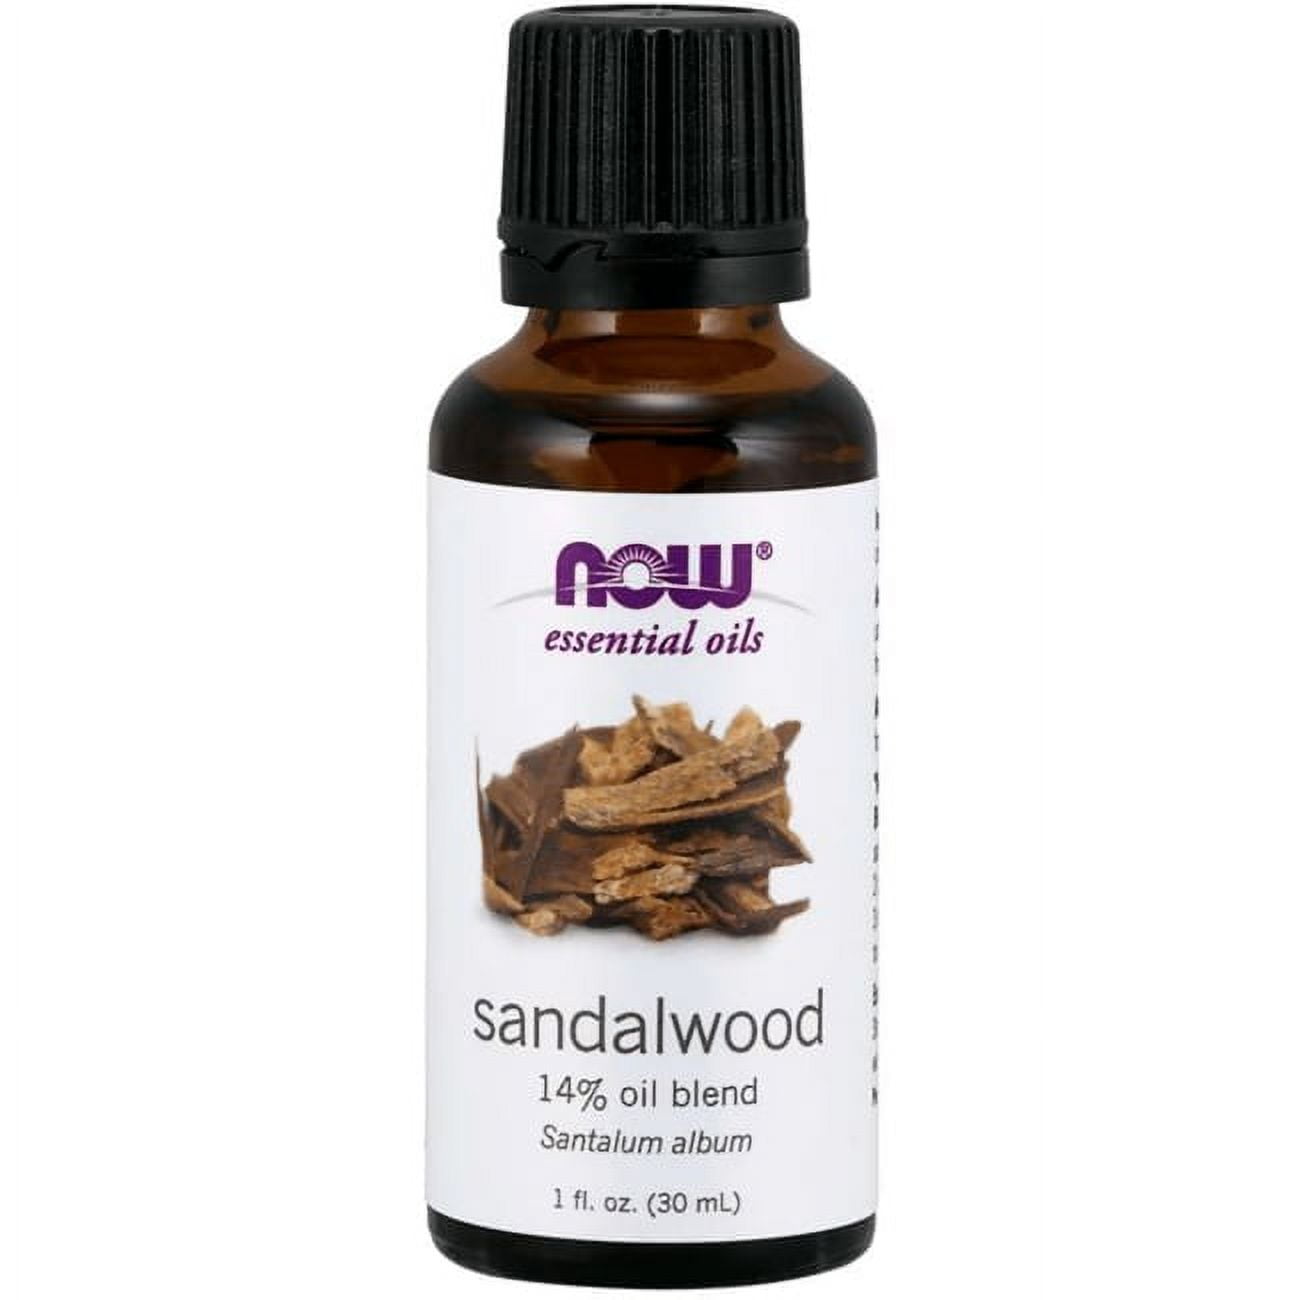 Now Sandalwood Oil Blend - 1 fl oz